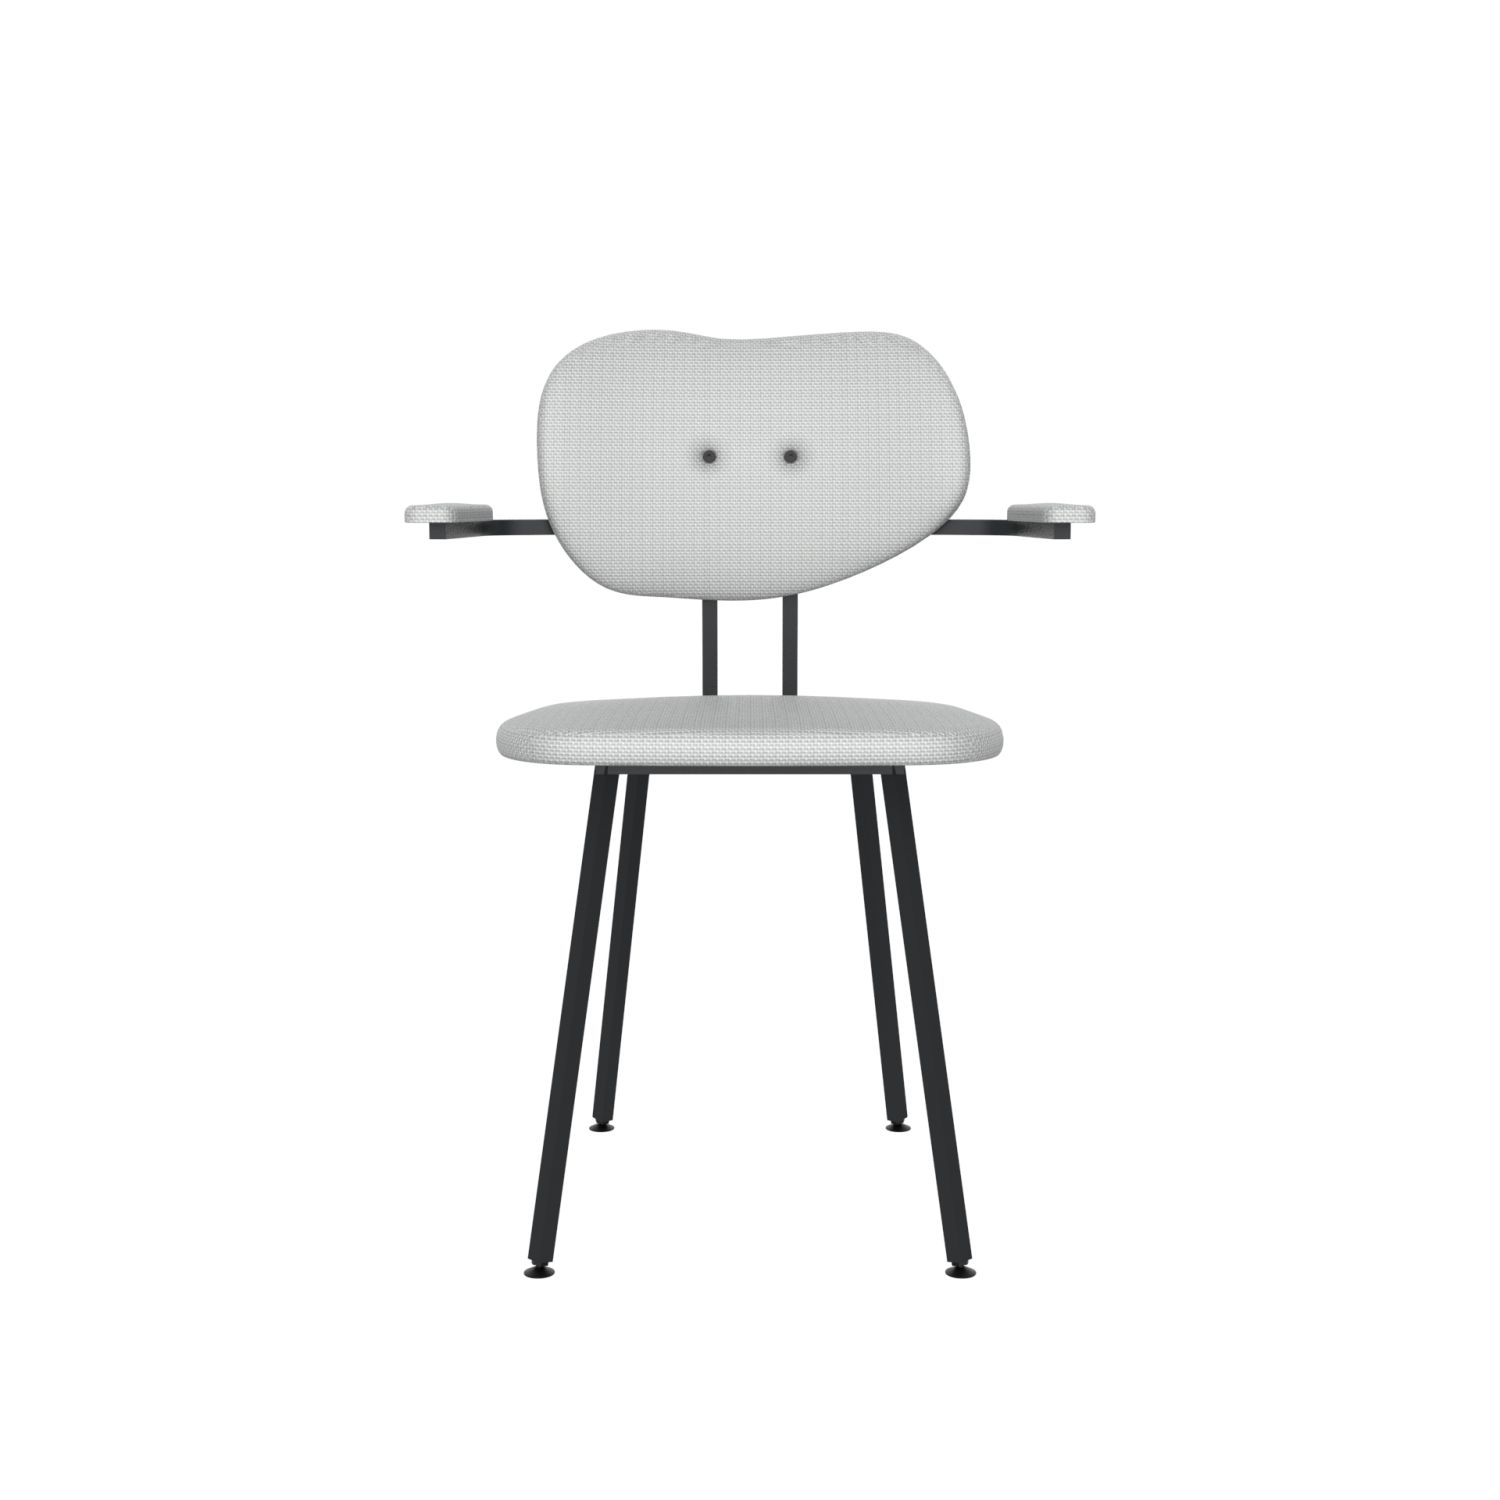 lensvelt maarten baas chair 102 not stackable with armrests backrest b breeze light grey 171 black ral9005 hard leg ends